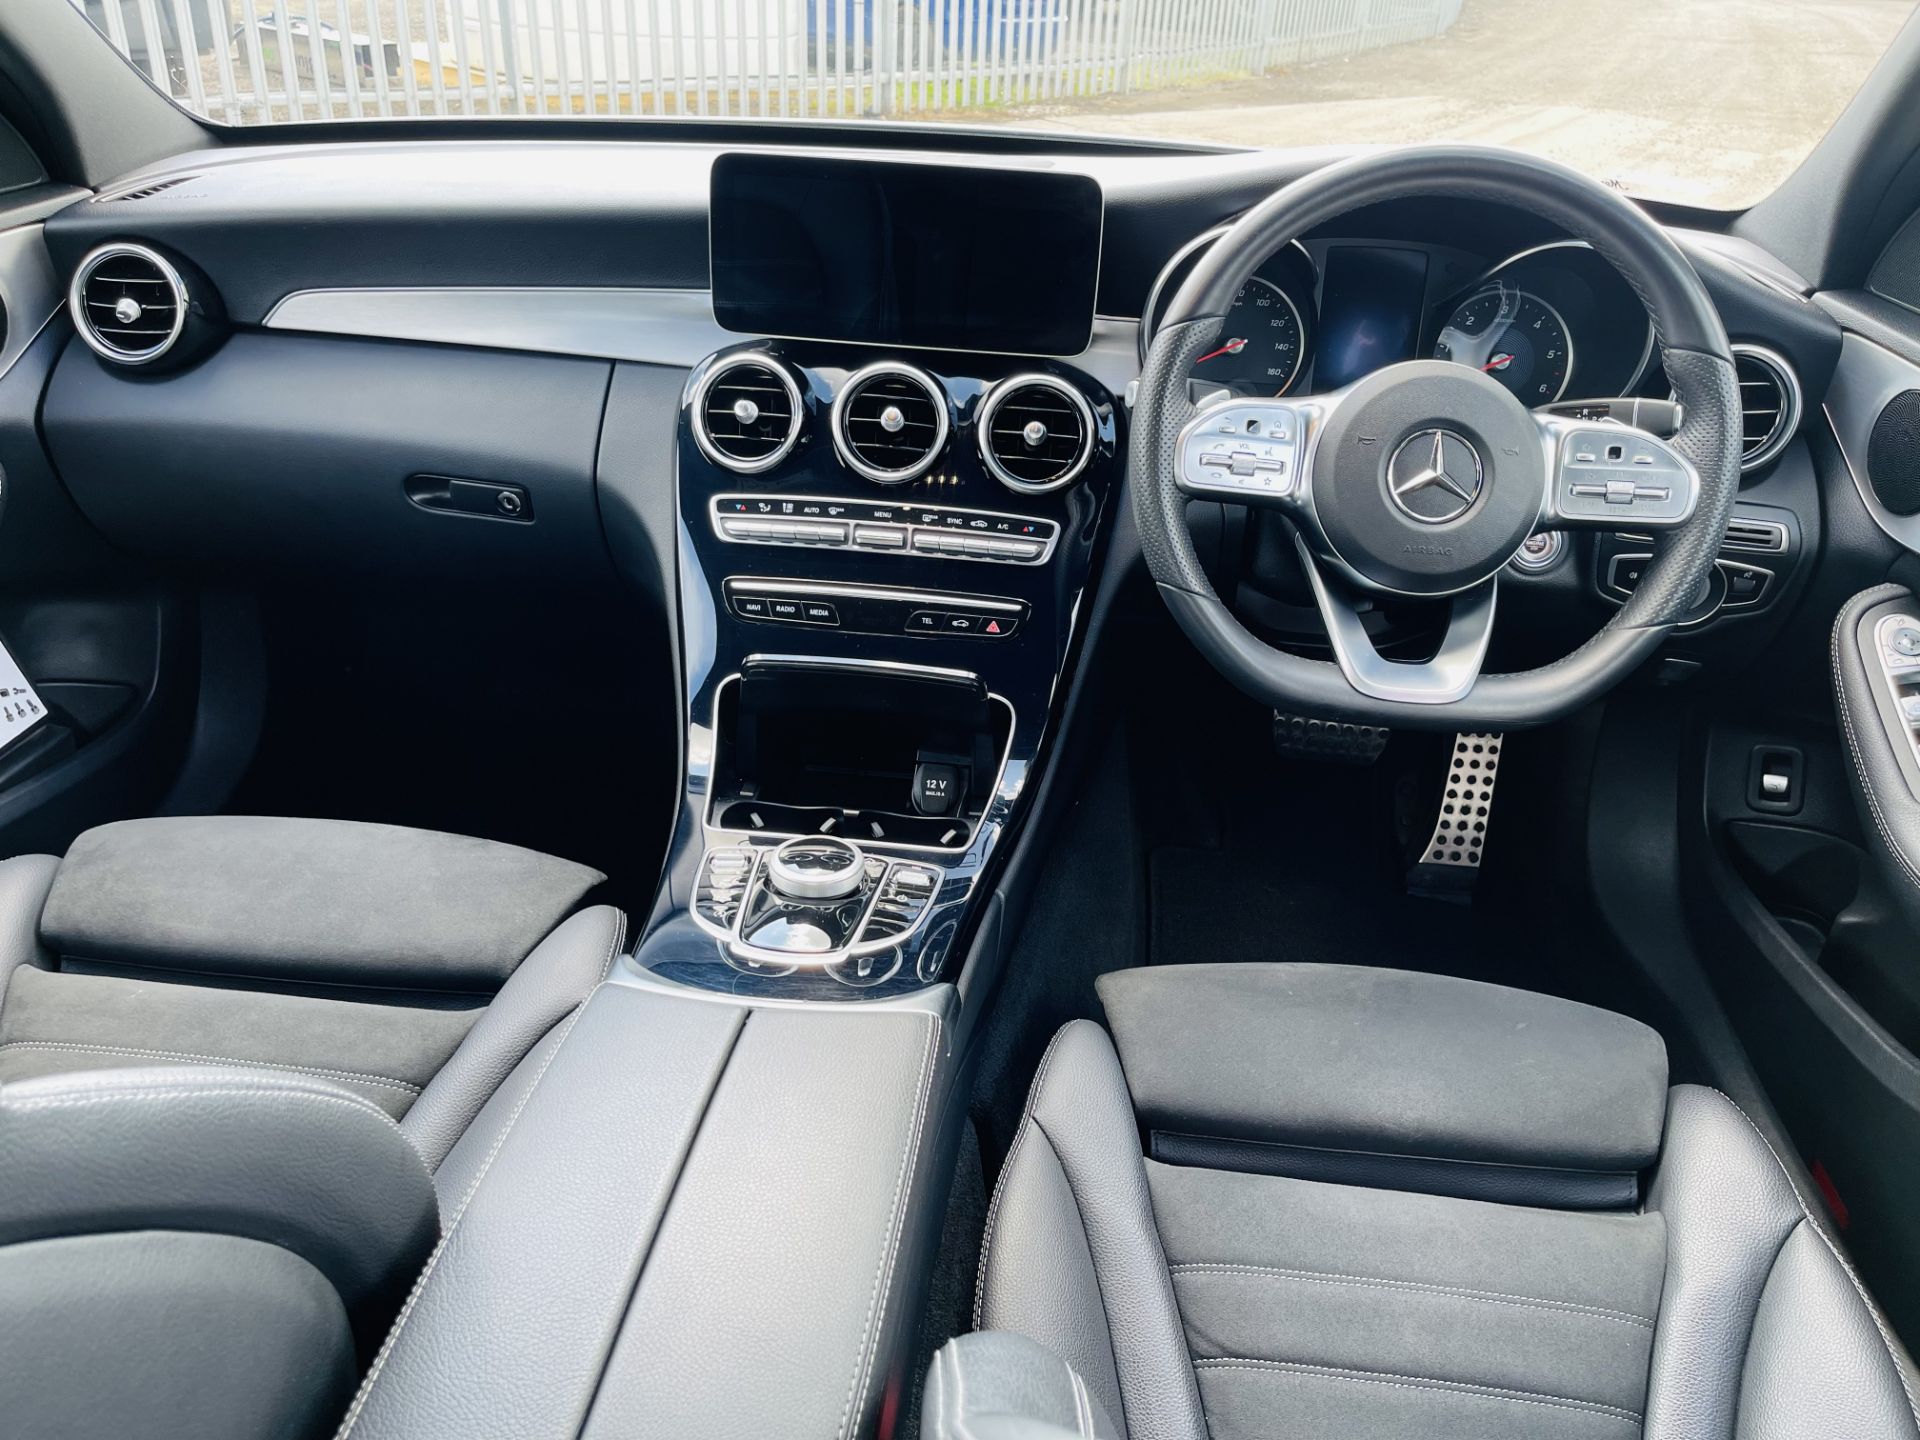 Mercedes Benz C220 AMG Line 9G-Tronic Auto 2019 ‘69 Reg’ - Sat Nav - A/C - Euro 6 - ULEZ Compliant - Image 15 of 30